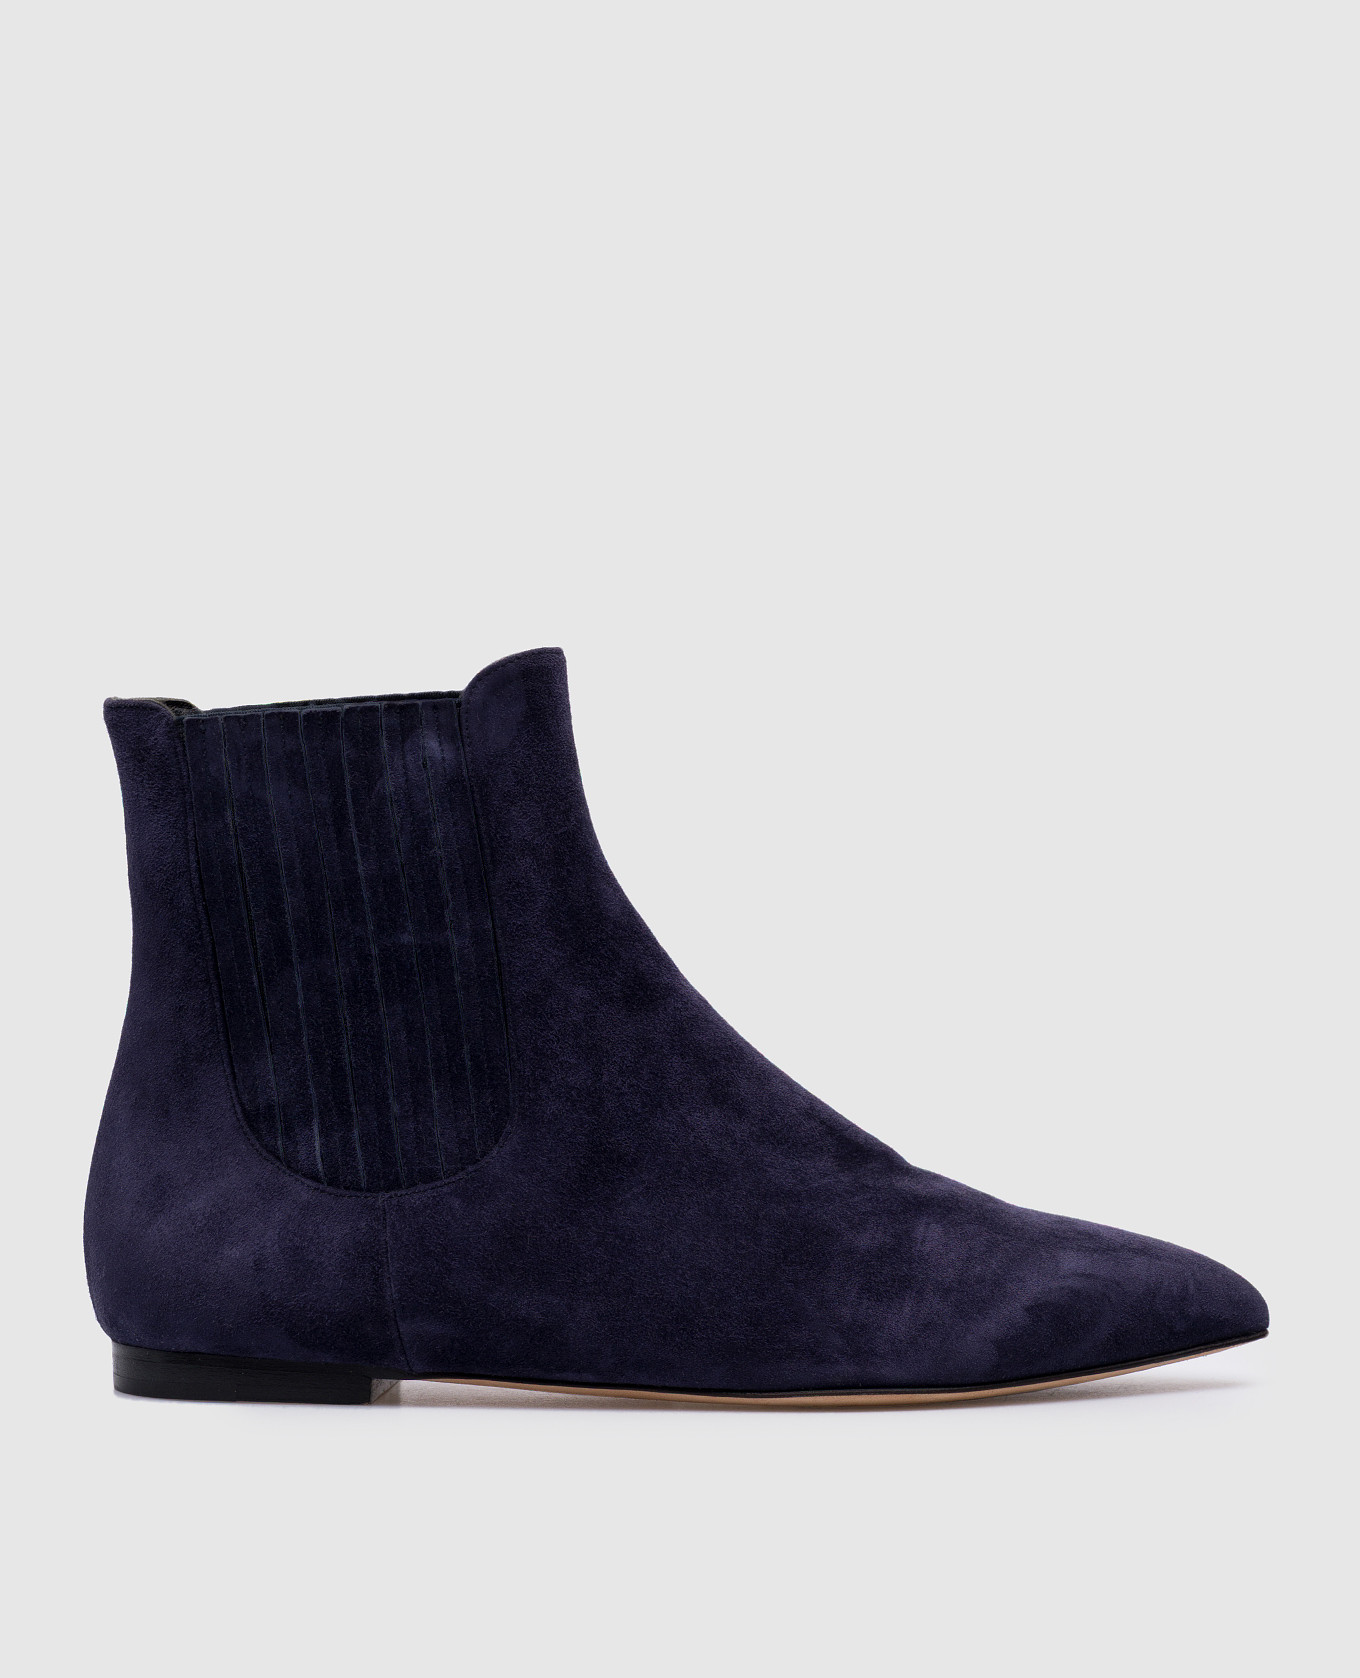 Mara blue suede boots